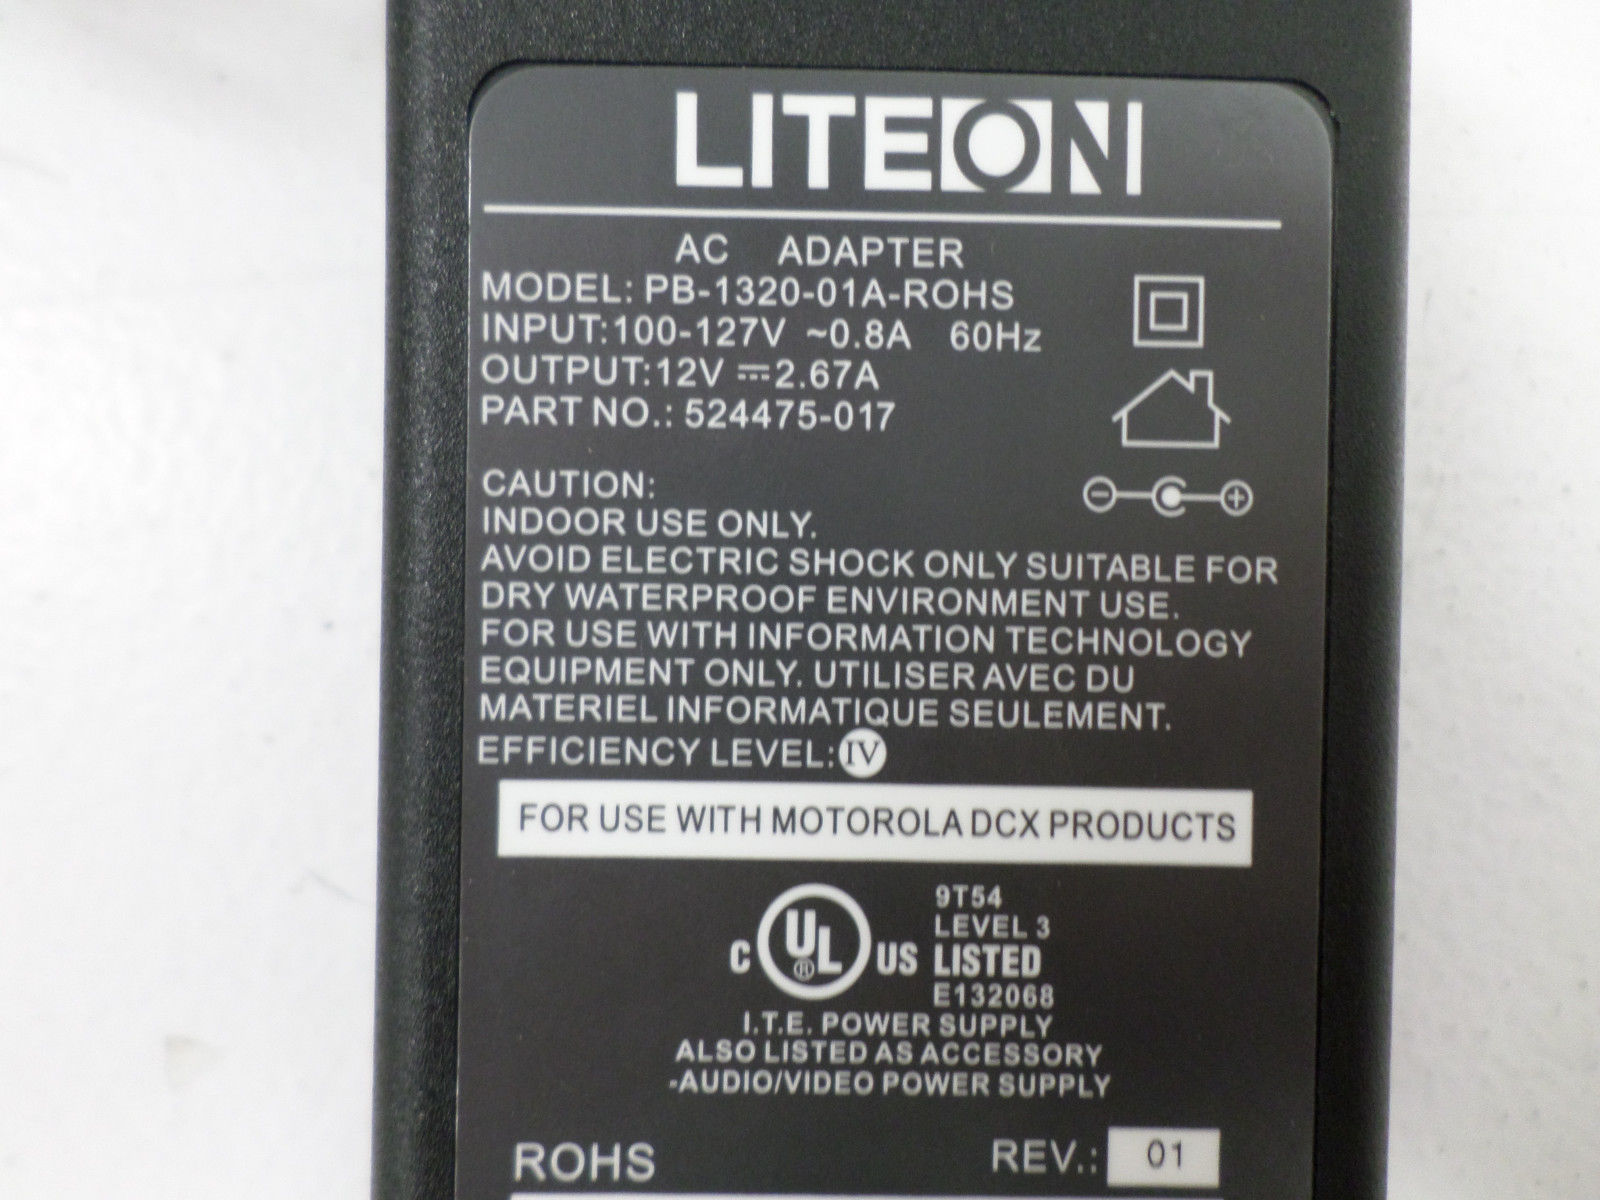 New LITEON PB-1320-01A-ROHS 12V 2.67A 524475-017 AC Adapter - Click Image to Close